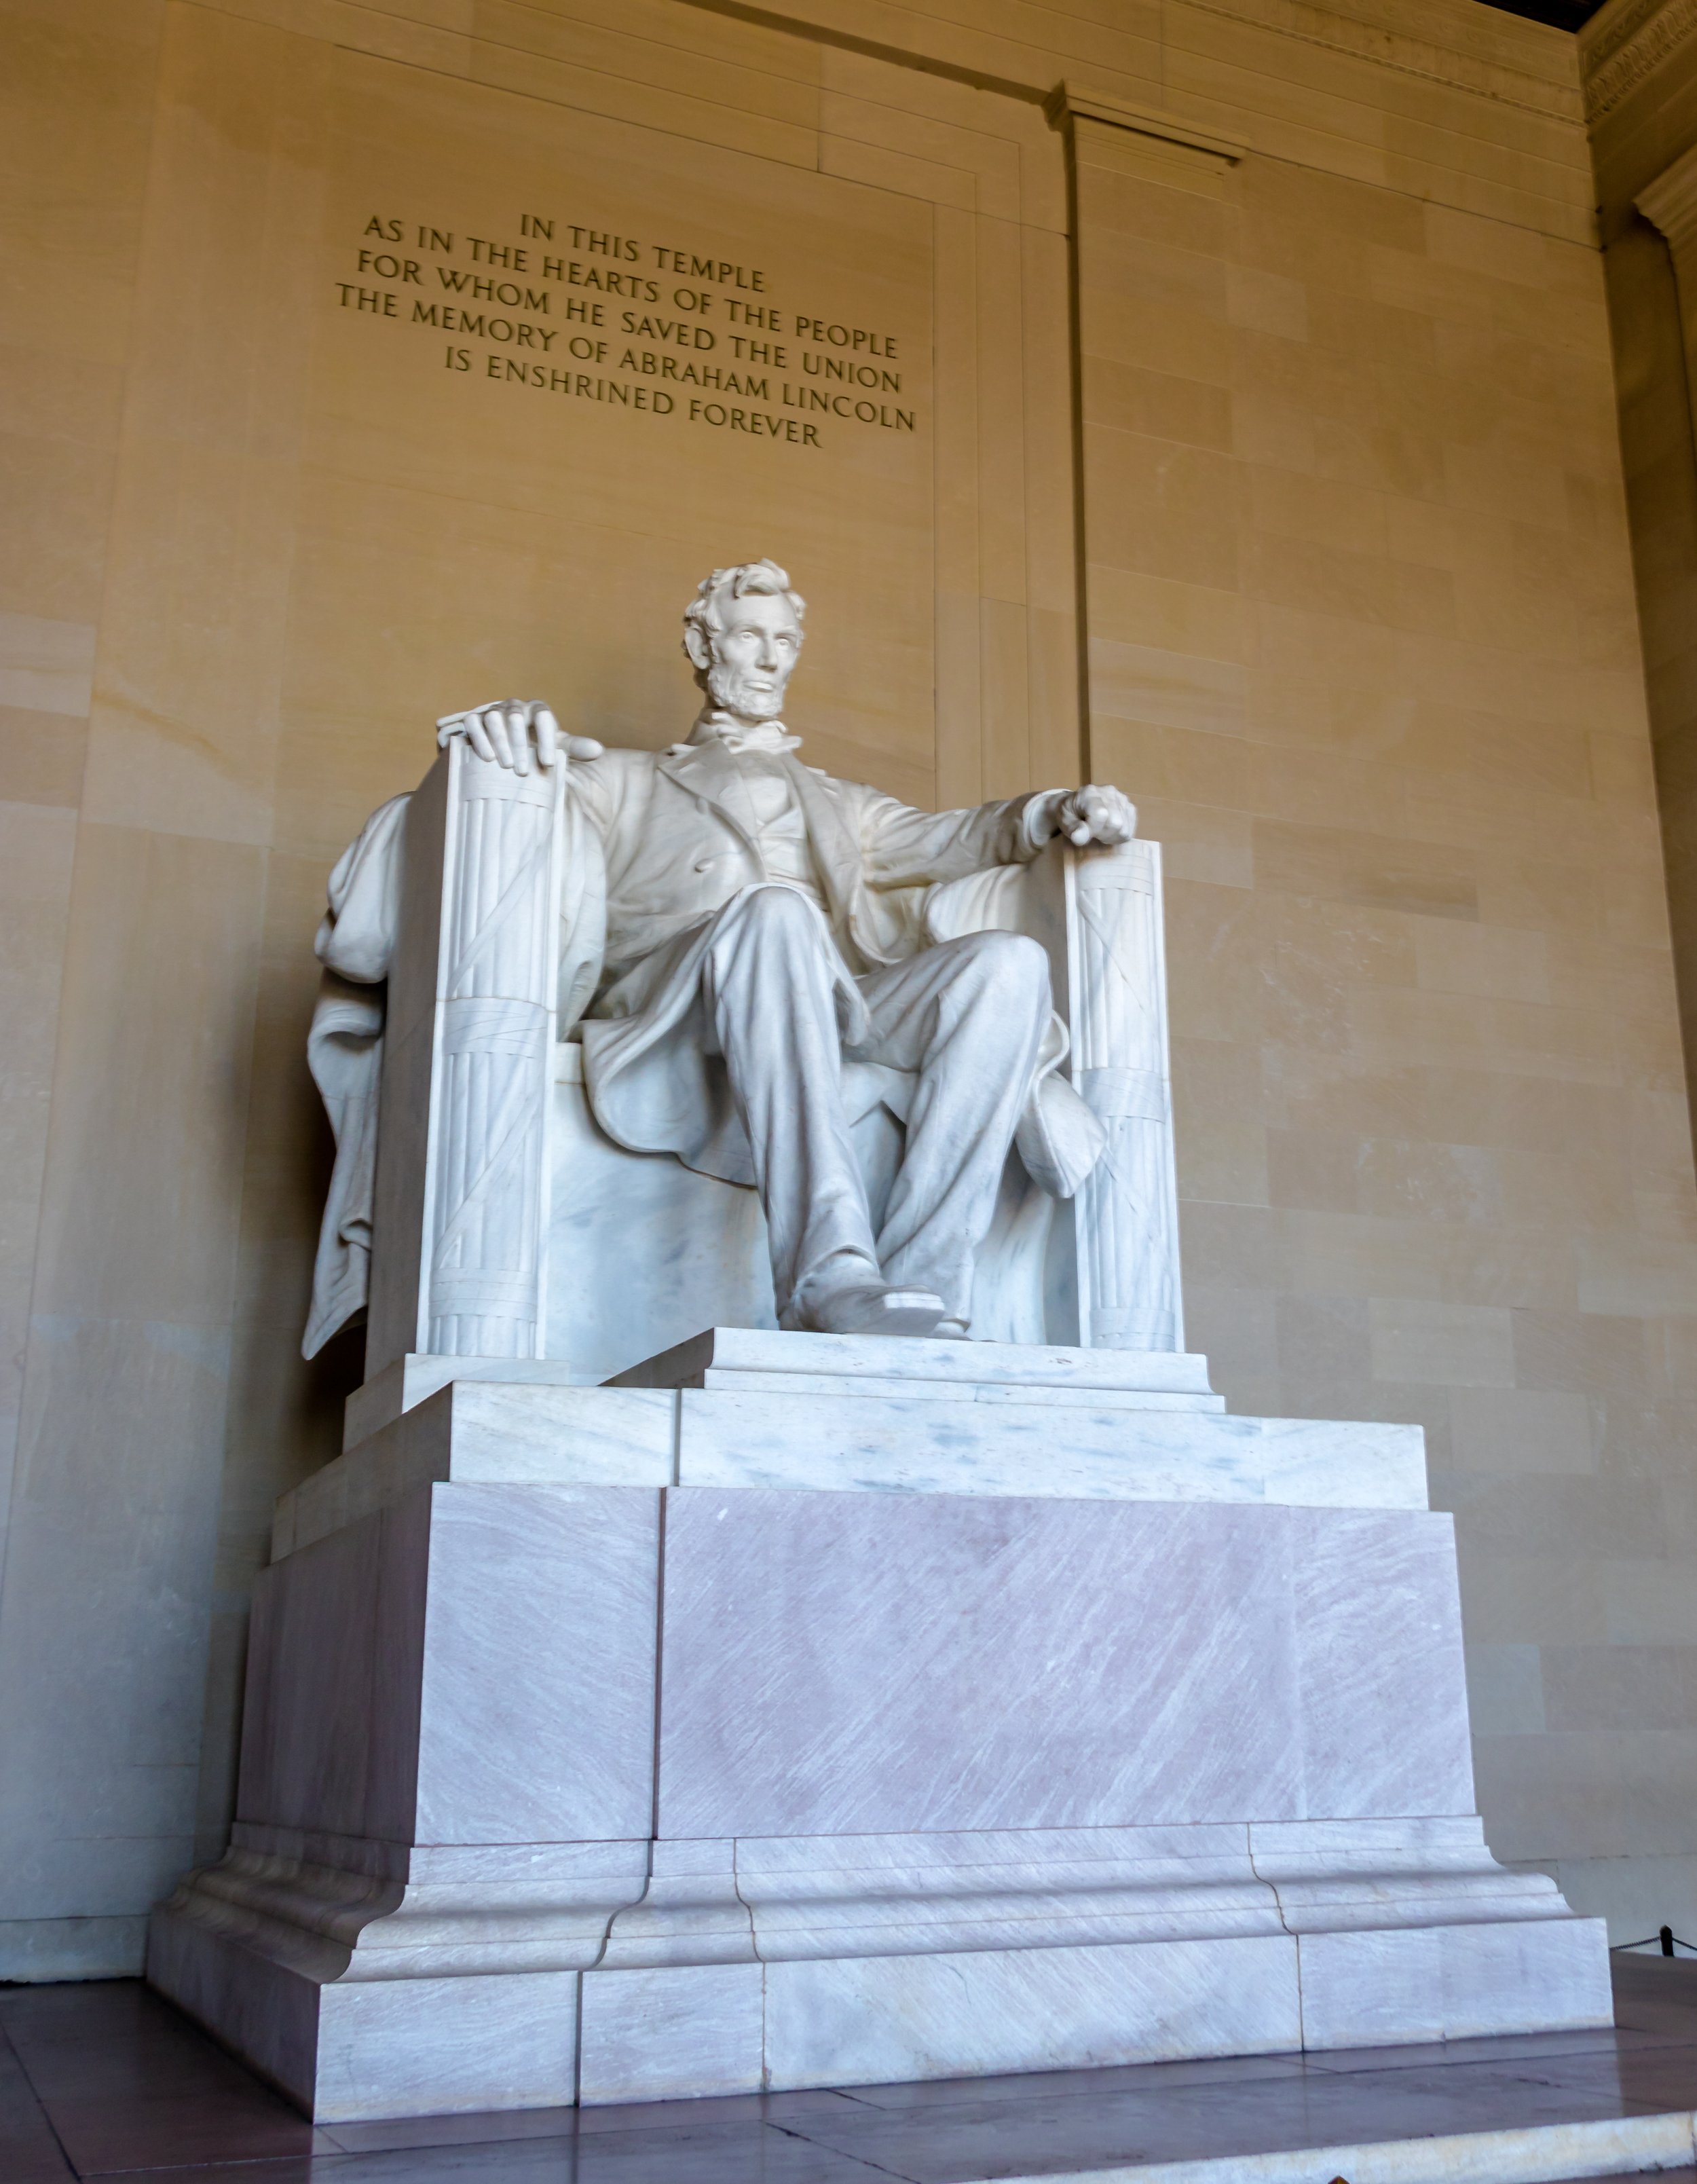 Abraham Lincoln Statue at Lincoln Memorial - Washington, D.C., U